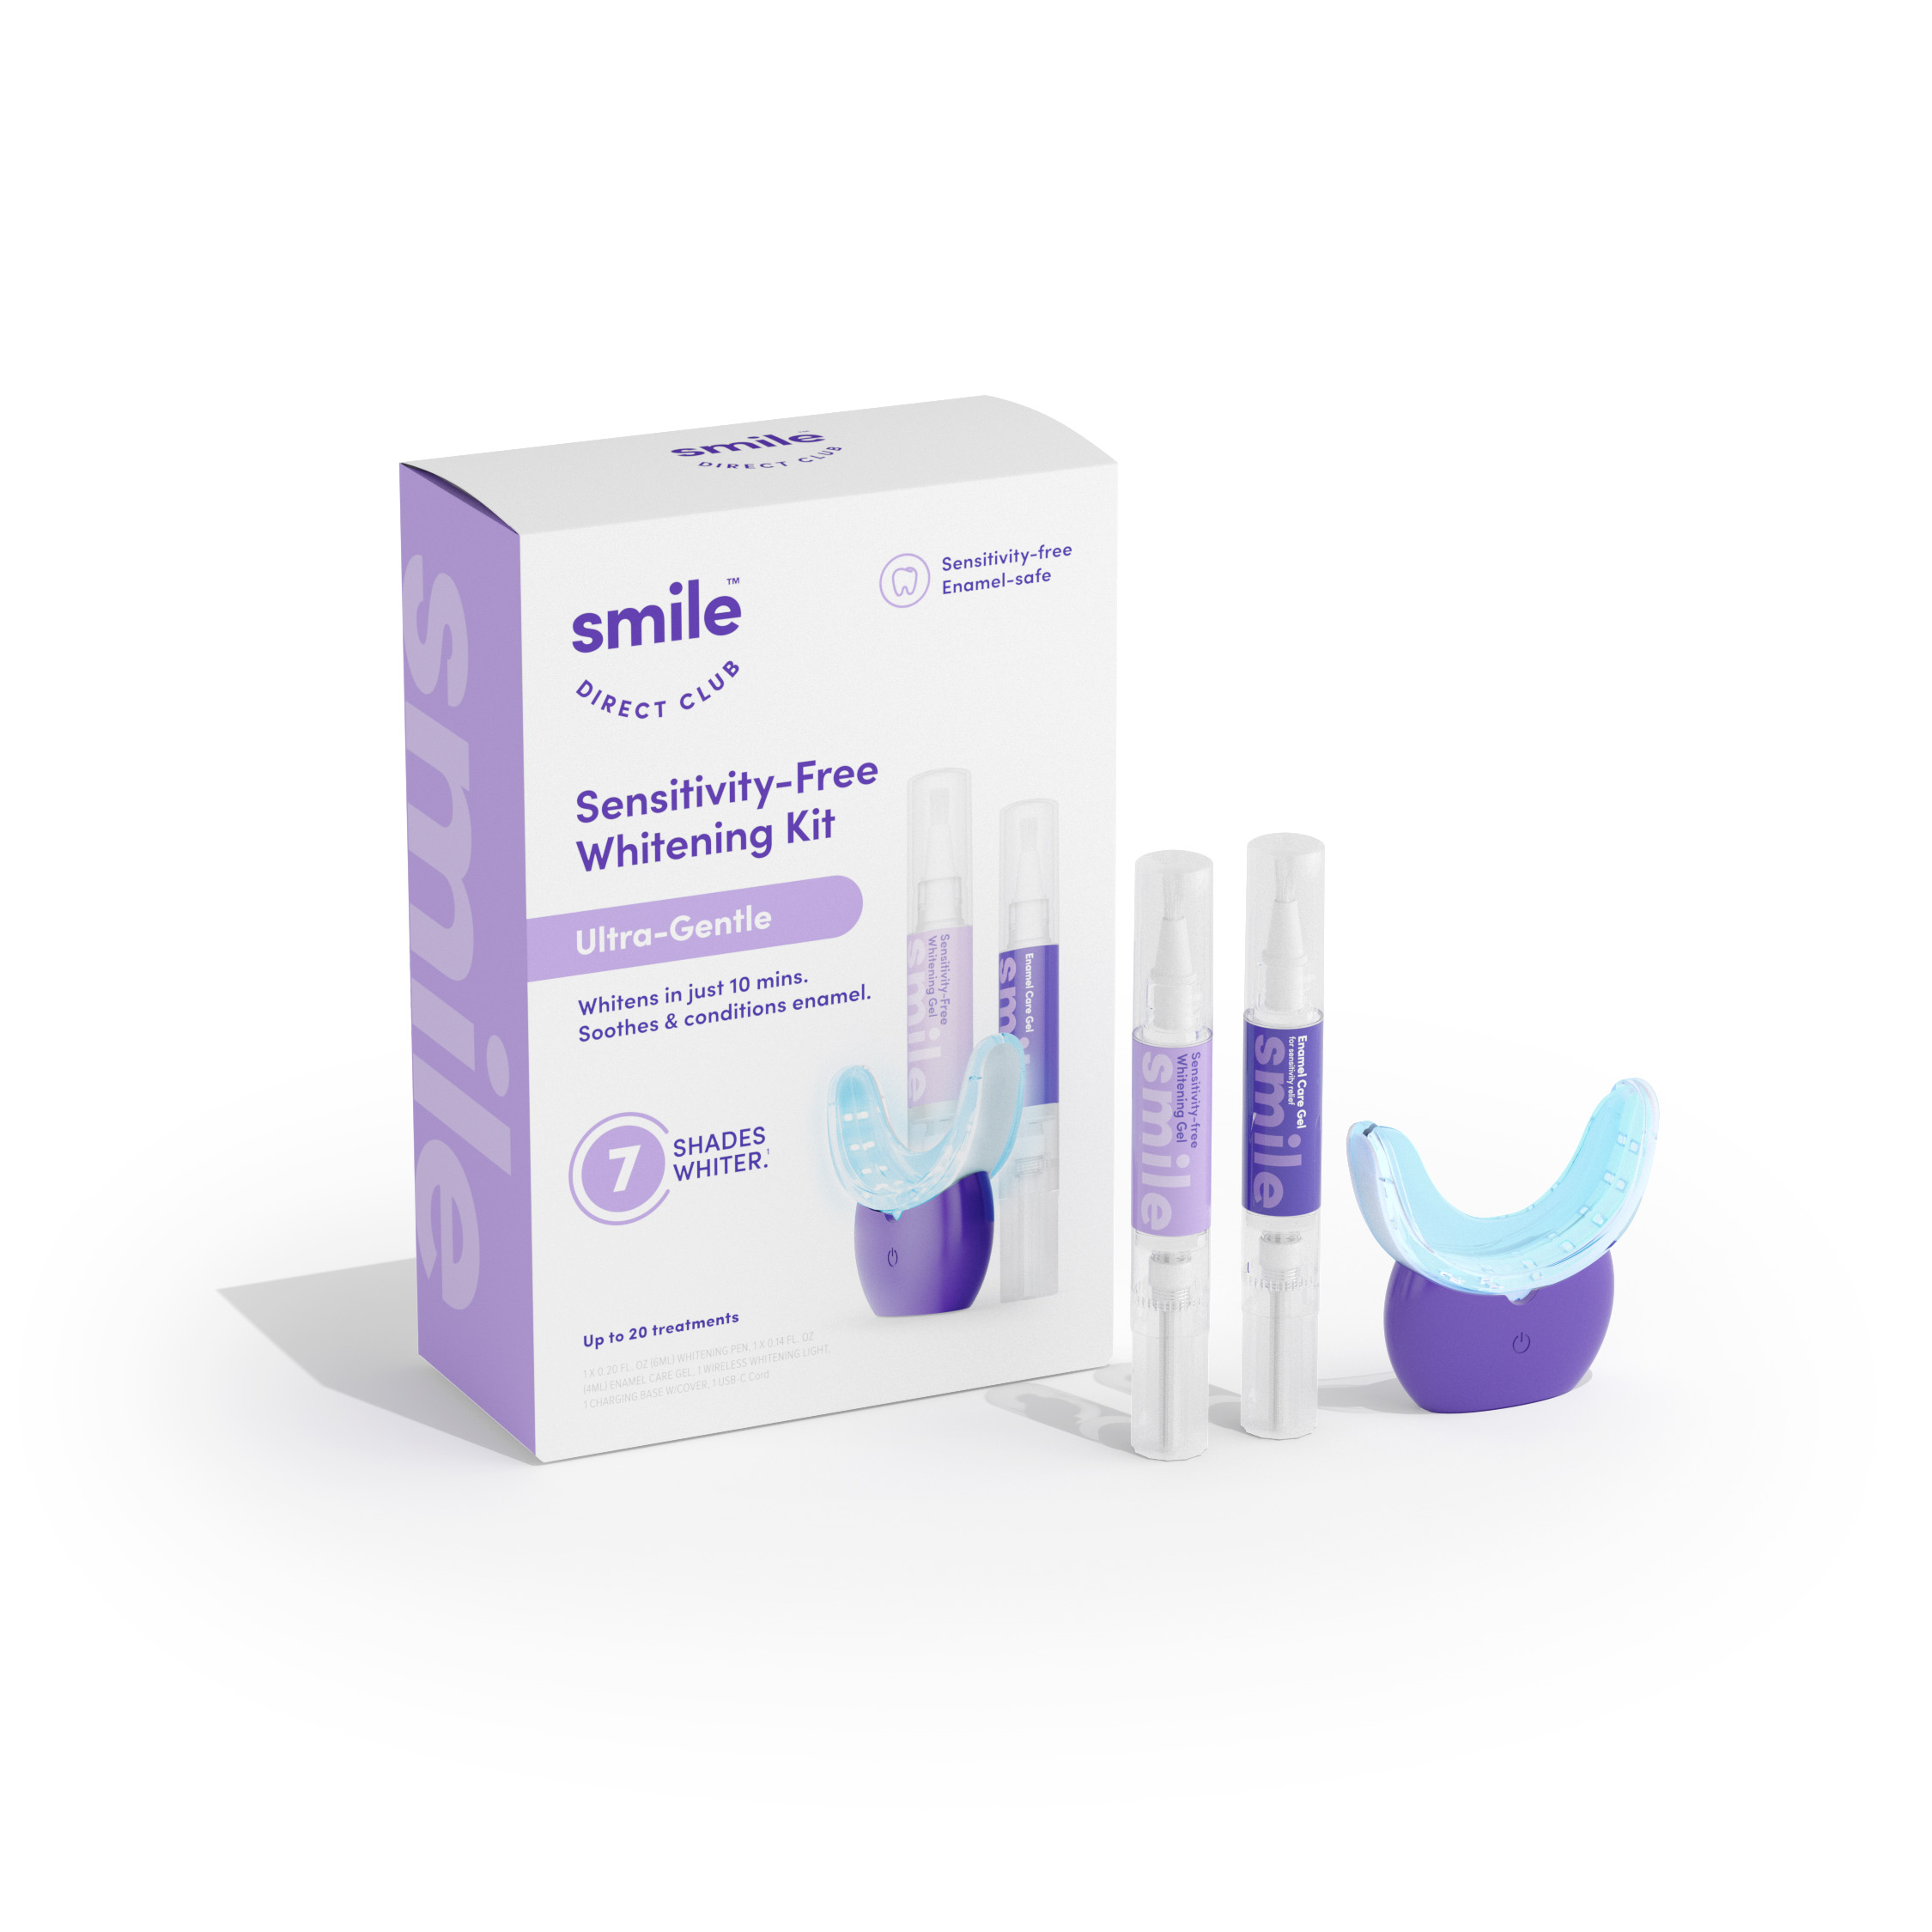 SmileDirectClub Adds Innovative Sensitivity-Free Whitening Kit to Its Oral Care Portfolio